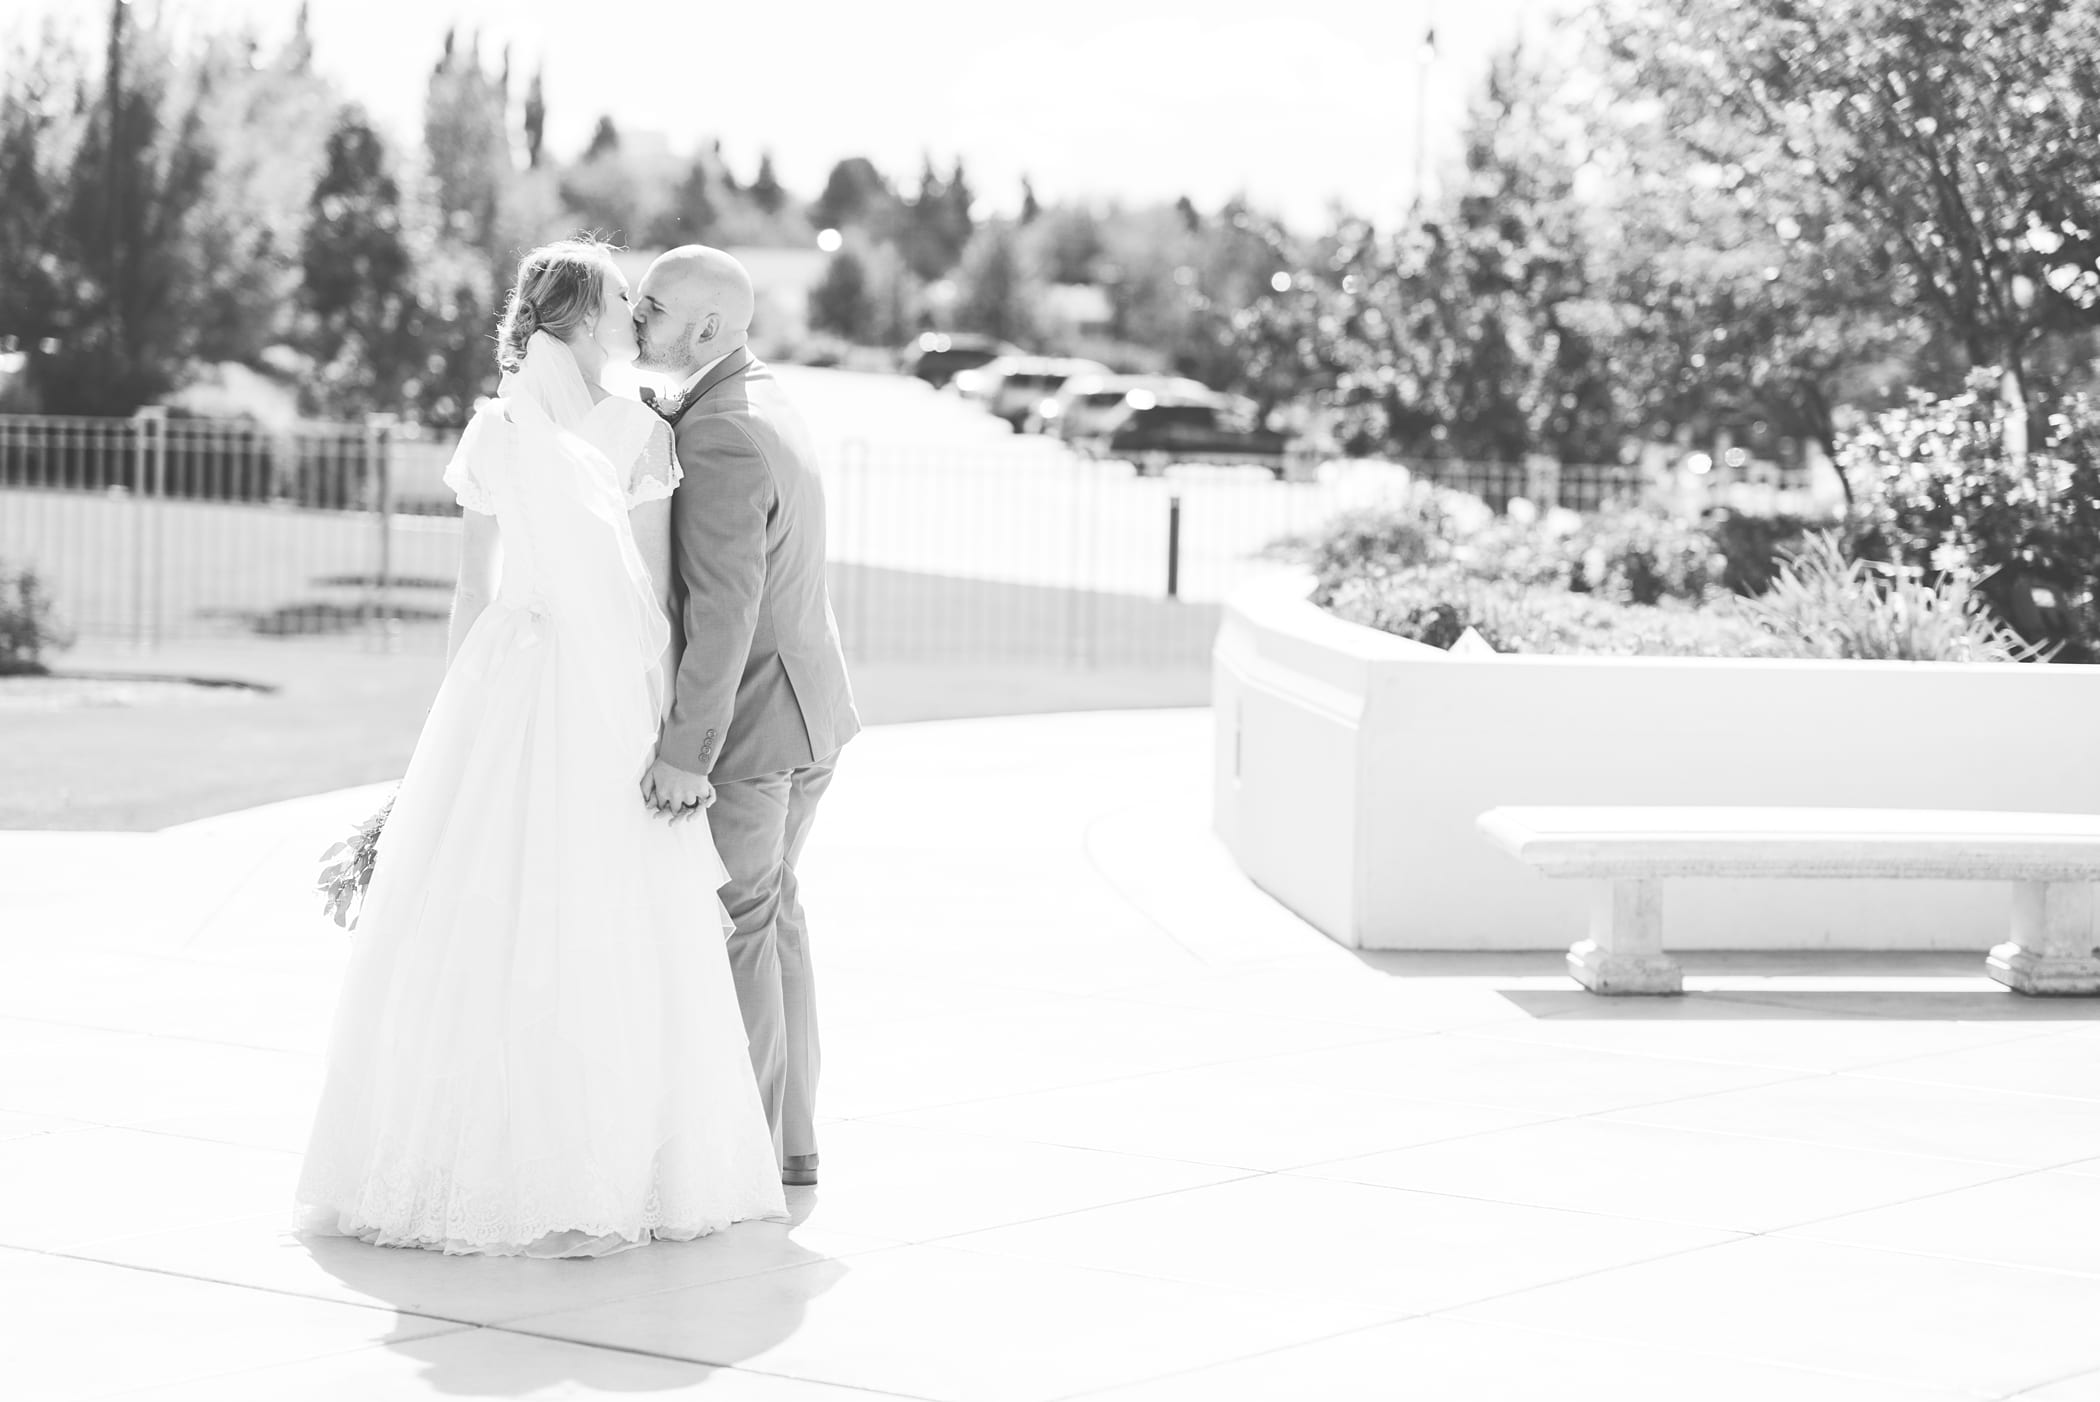 Rexburg Idaho LDS Temple wedding by Michelle & Logan